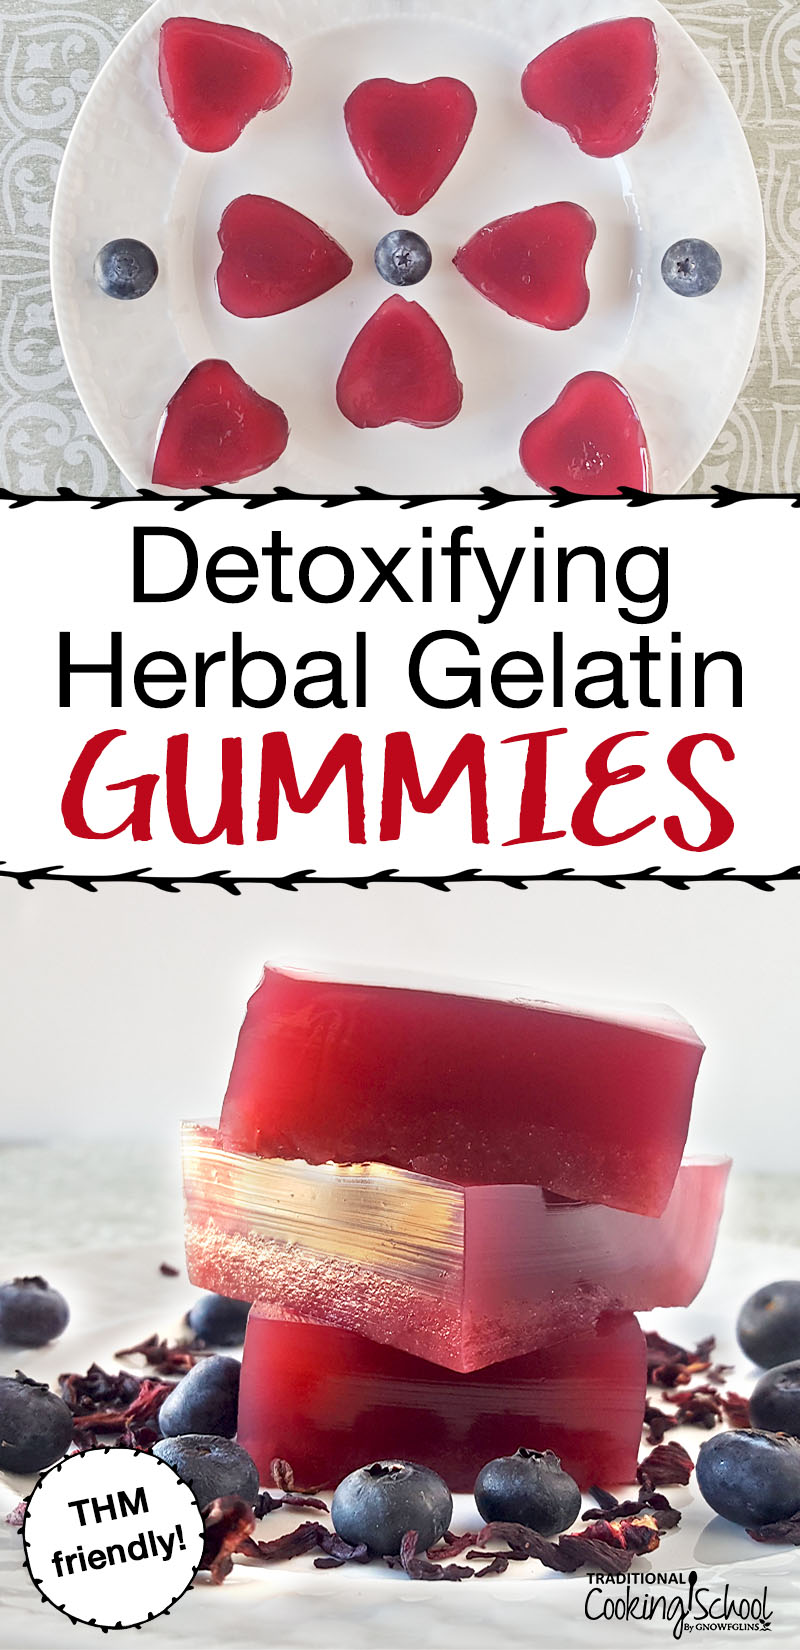 photo collage of gelatin gummies and text overlay: "Detoxifying Herbal Gelatin Gummies"